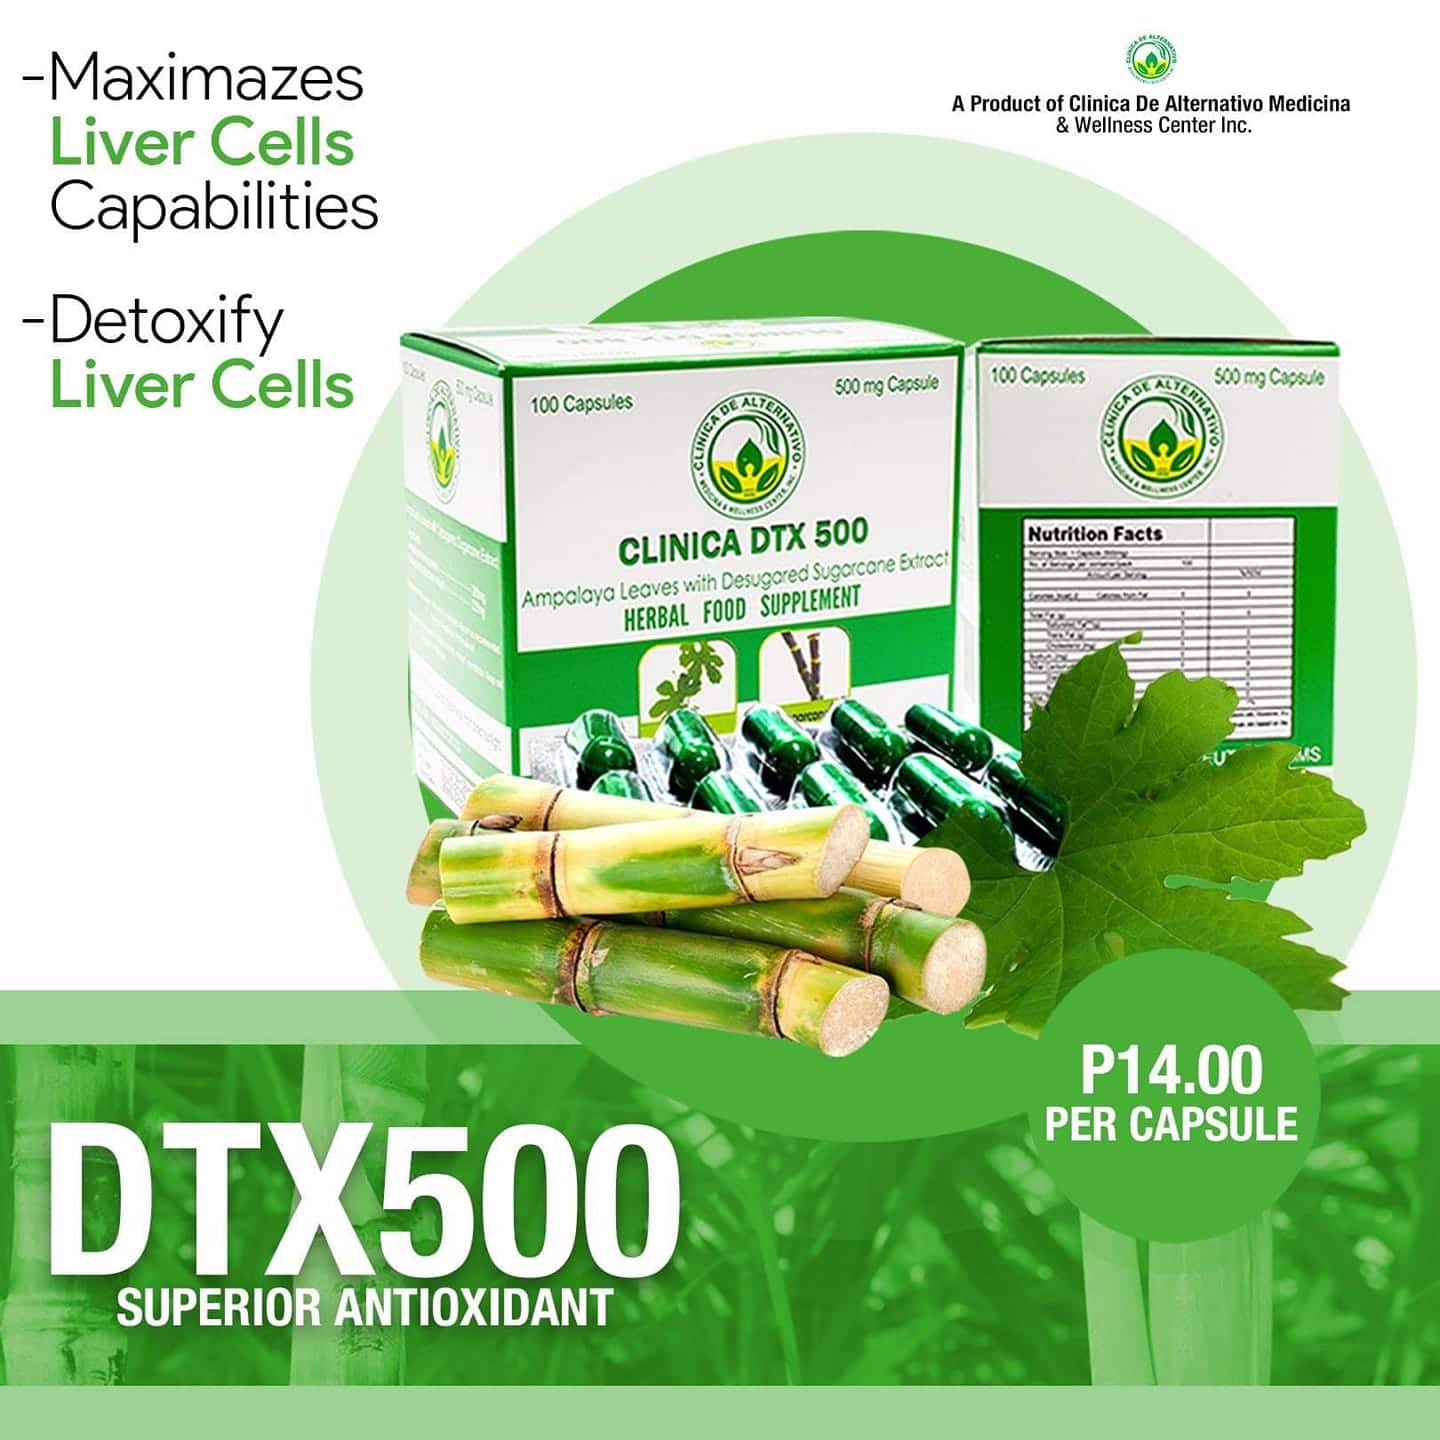 DTX500. The superior antioxidant.